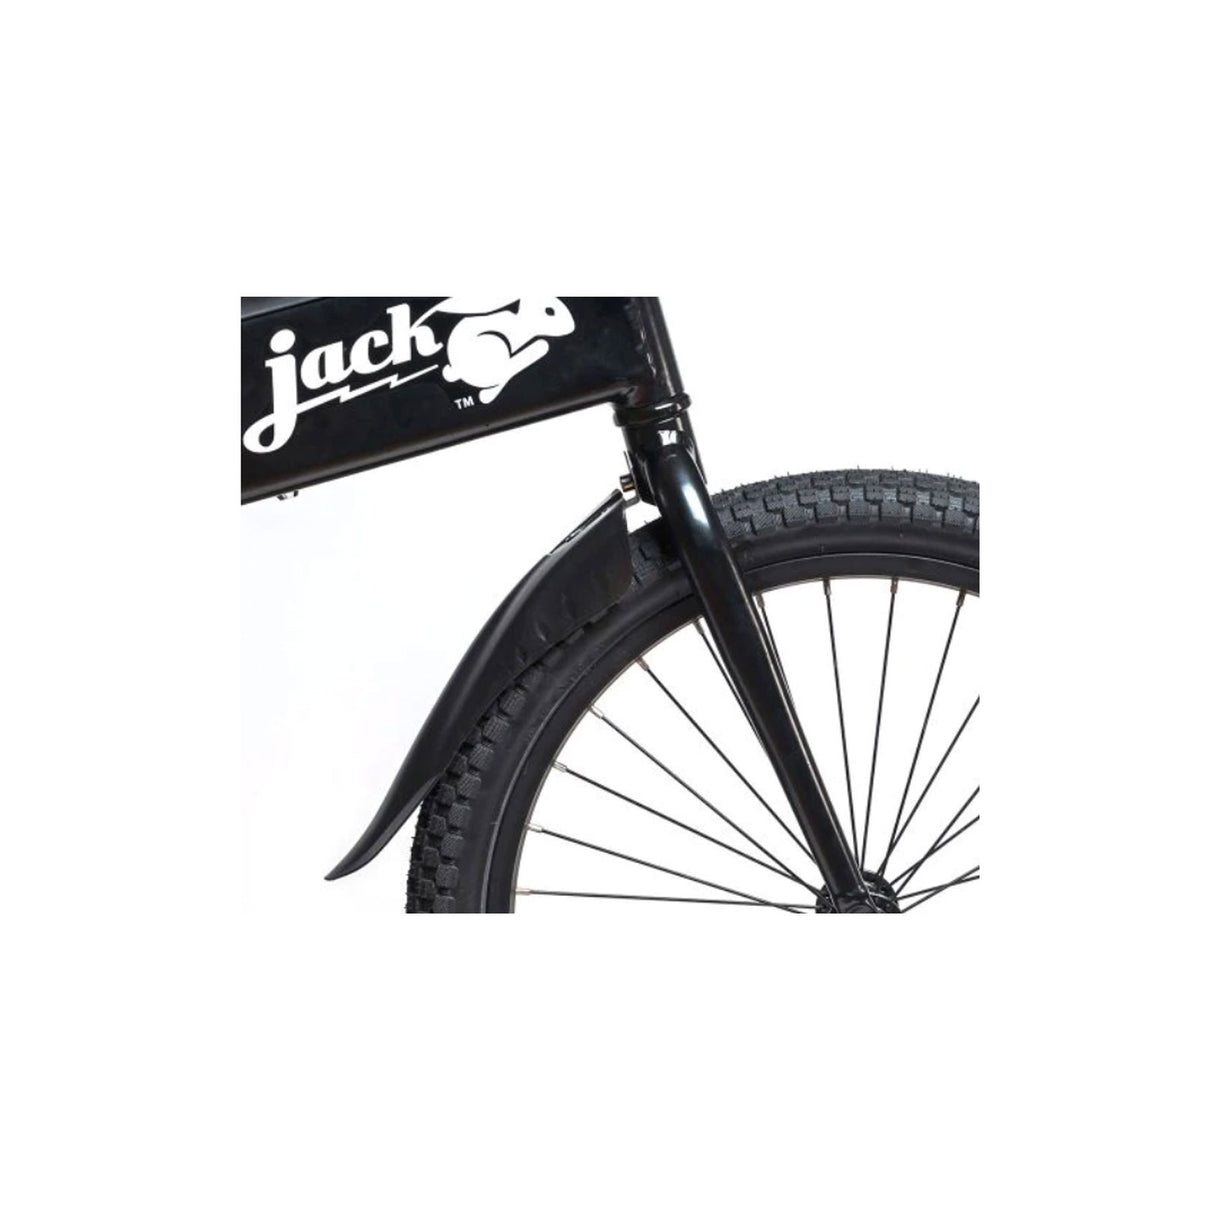 JackRabbit Front and Rear Fender Kit - Black Outdoor - Transportation - The Heel Shoe Fitters